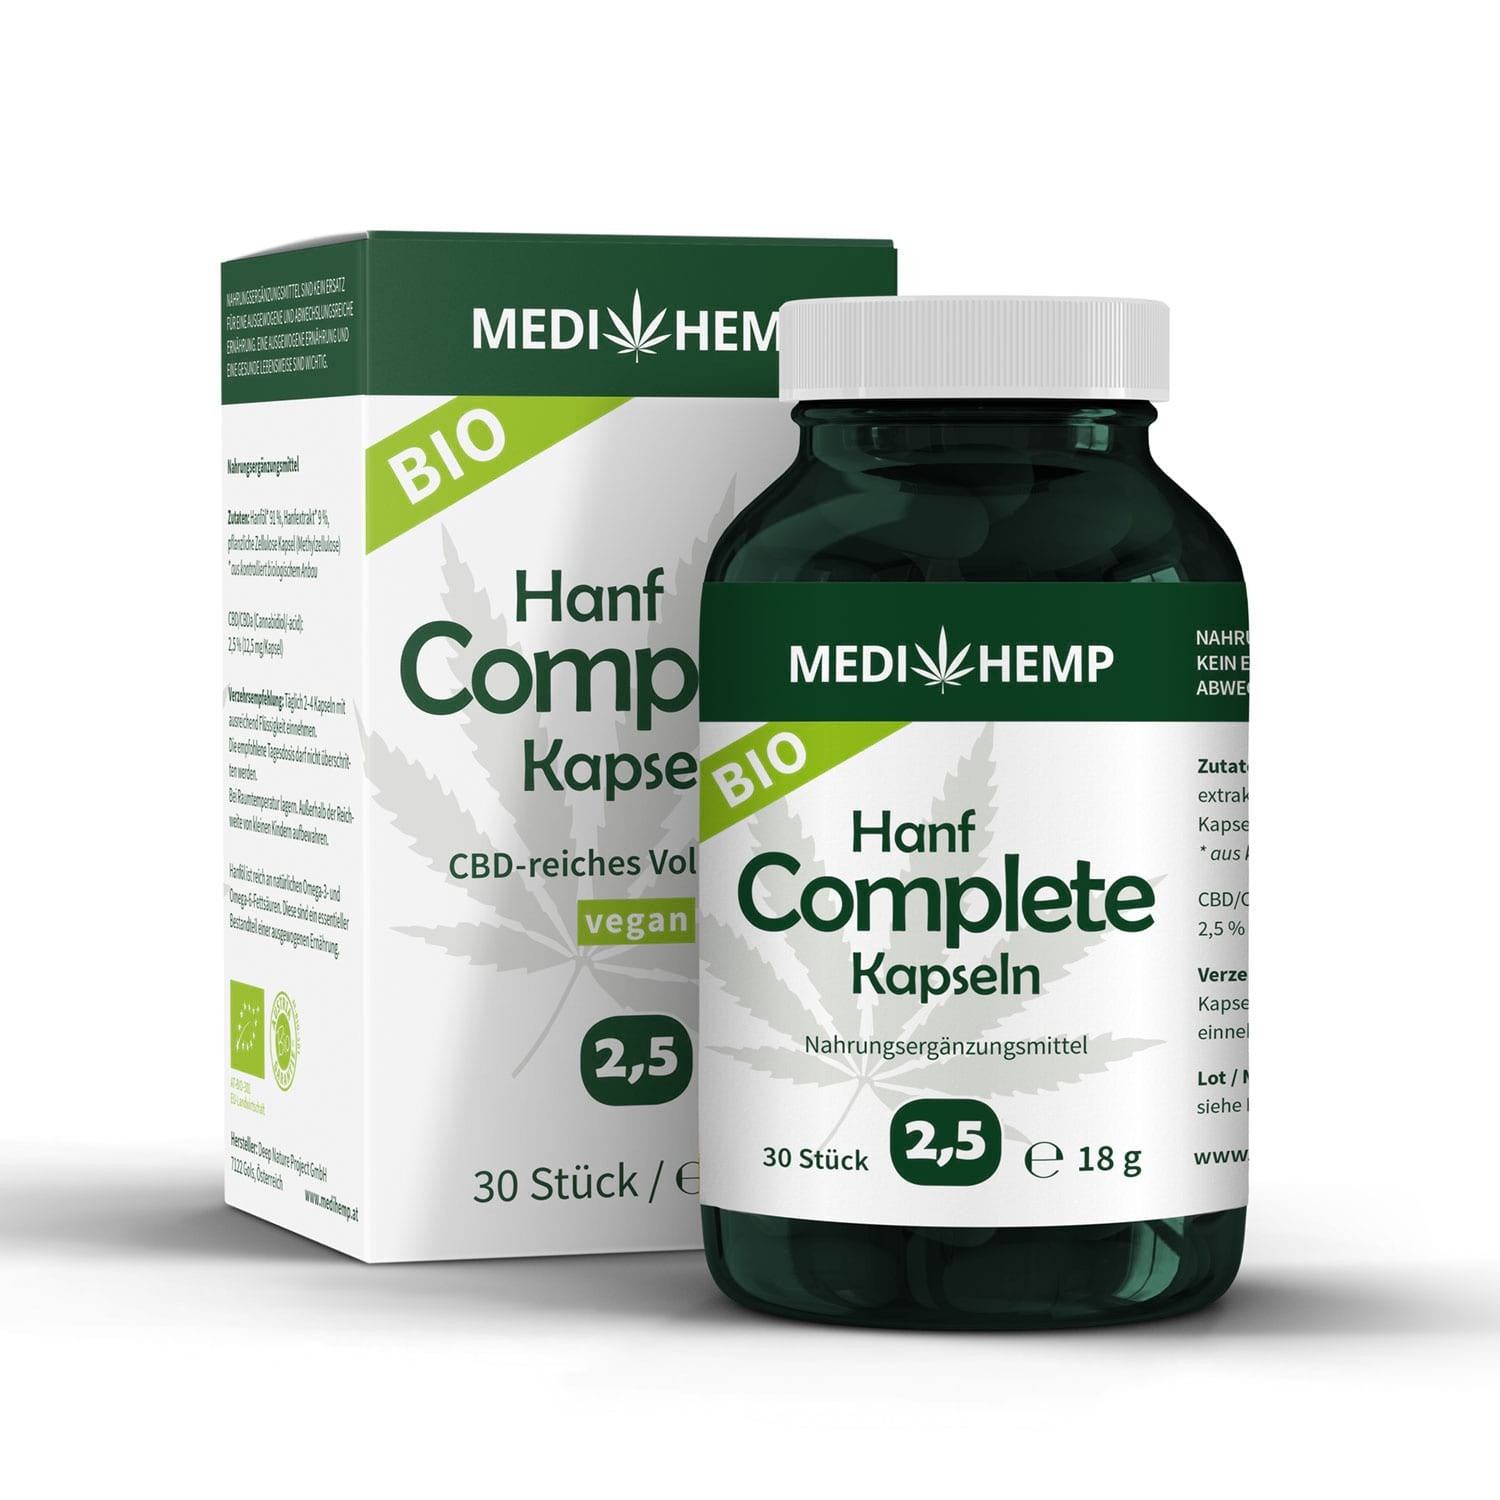 Medihemp Bio Hanf Complete Kapseln - 2,5% - CBD Aroma